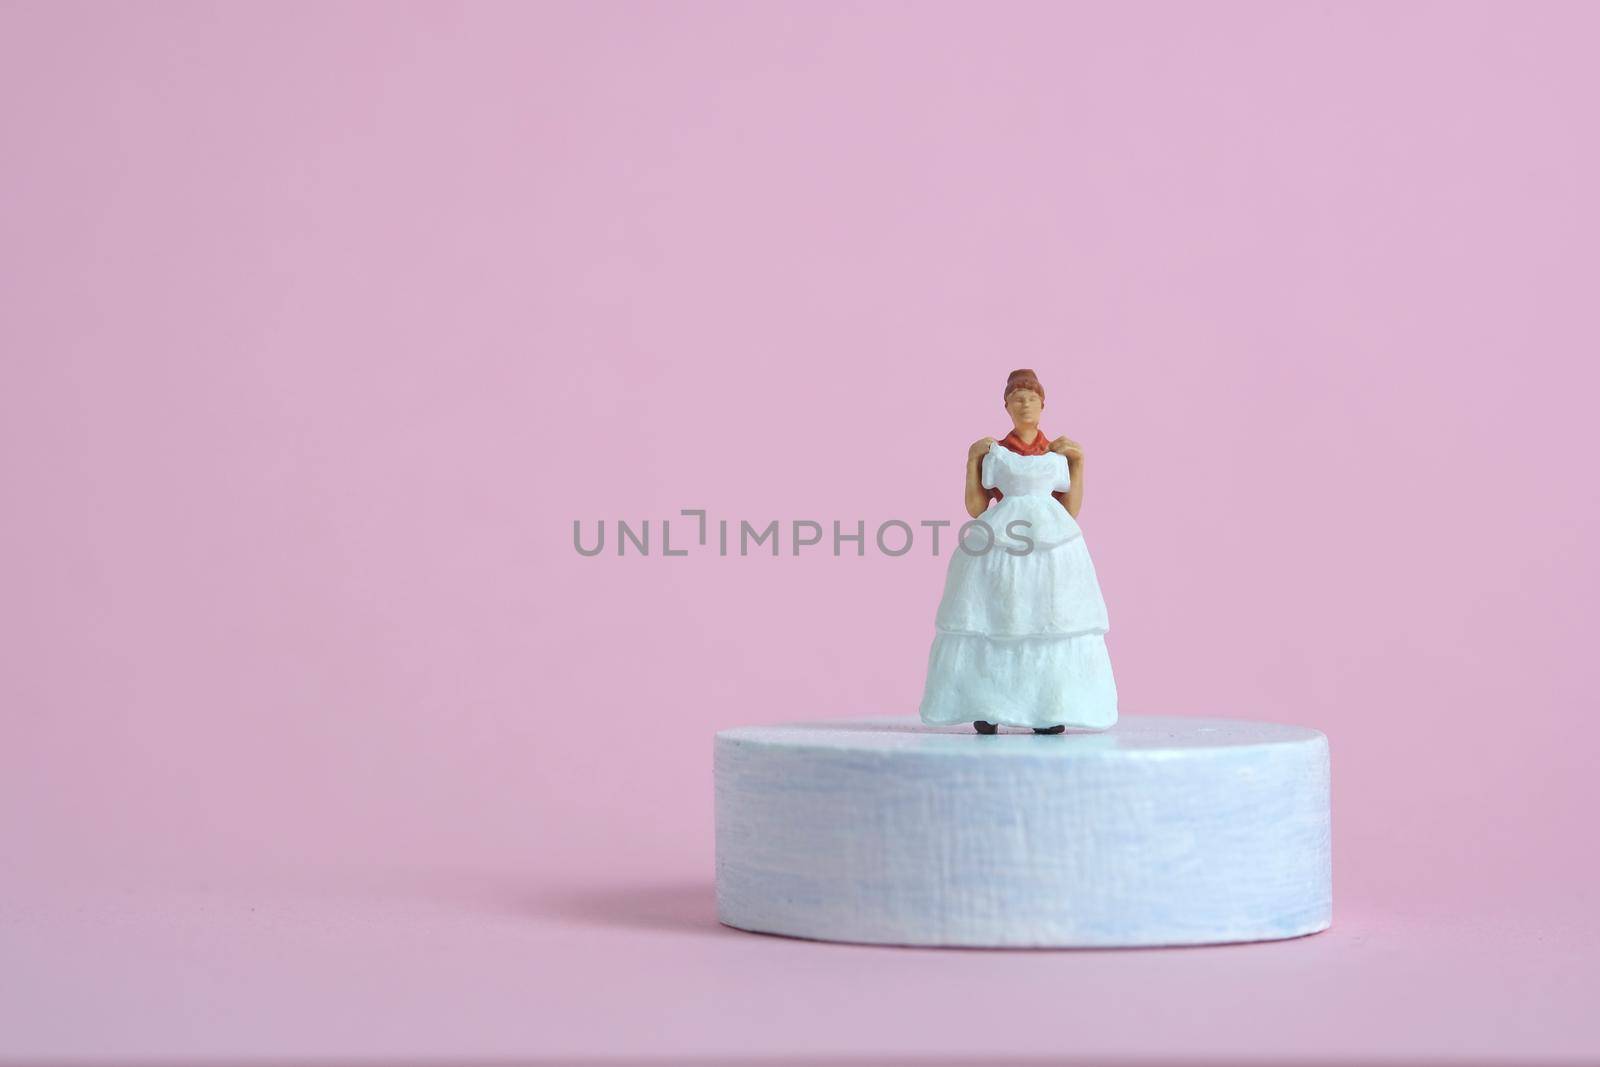 Women miniature people trying to choose wedding dress standing above platform pedestal on blue pink background by Macrostud